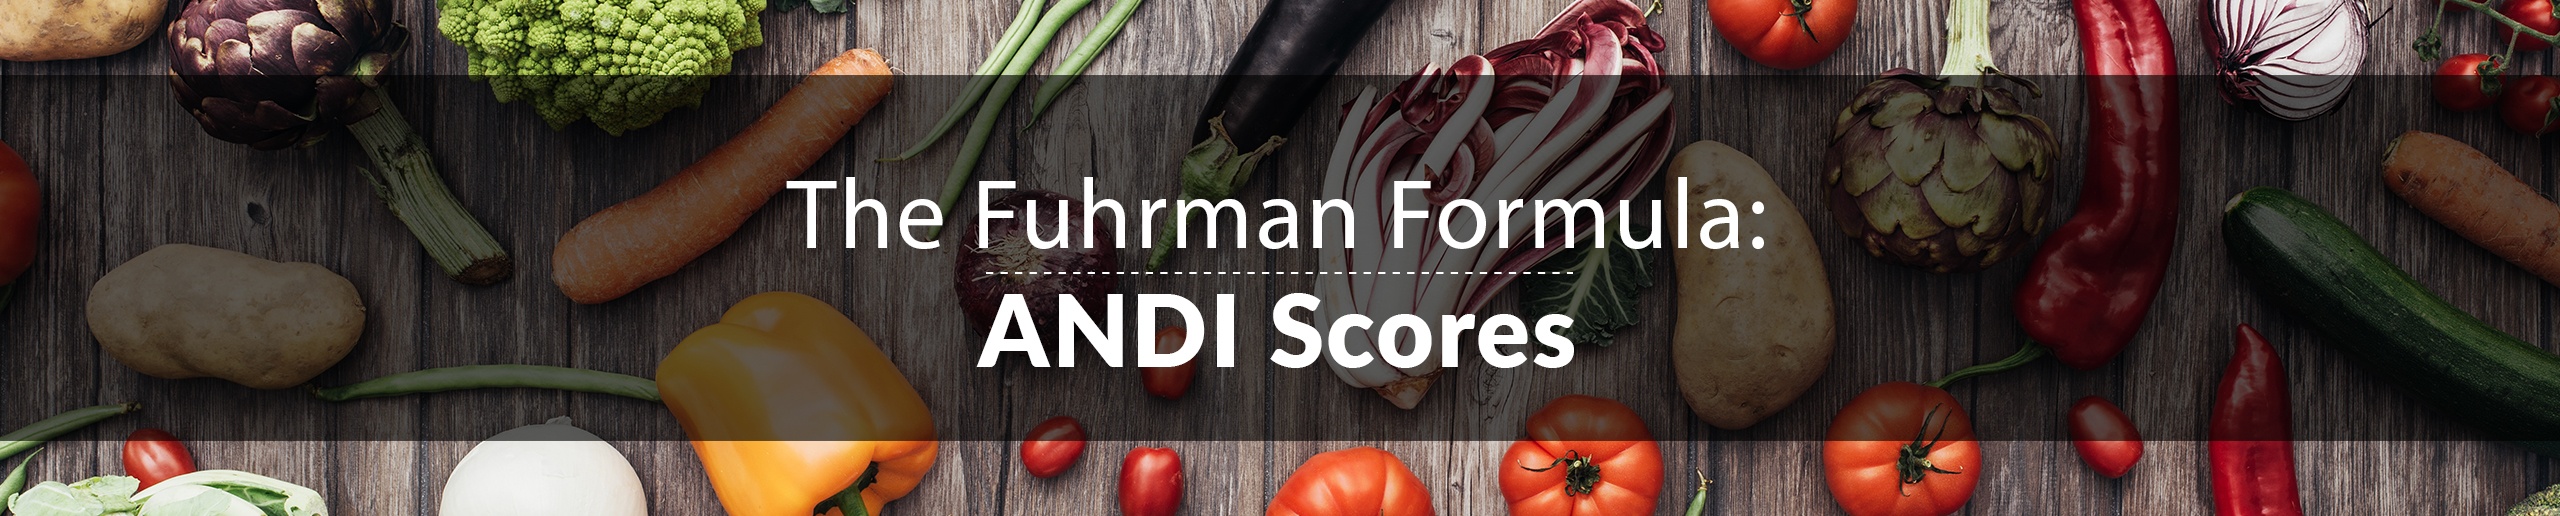 ANDI-Scores-header-1-1.jpg